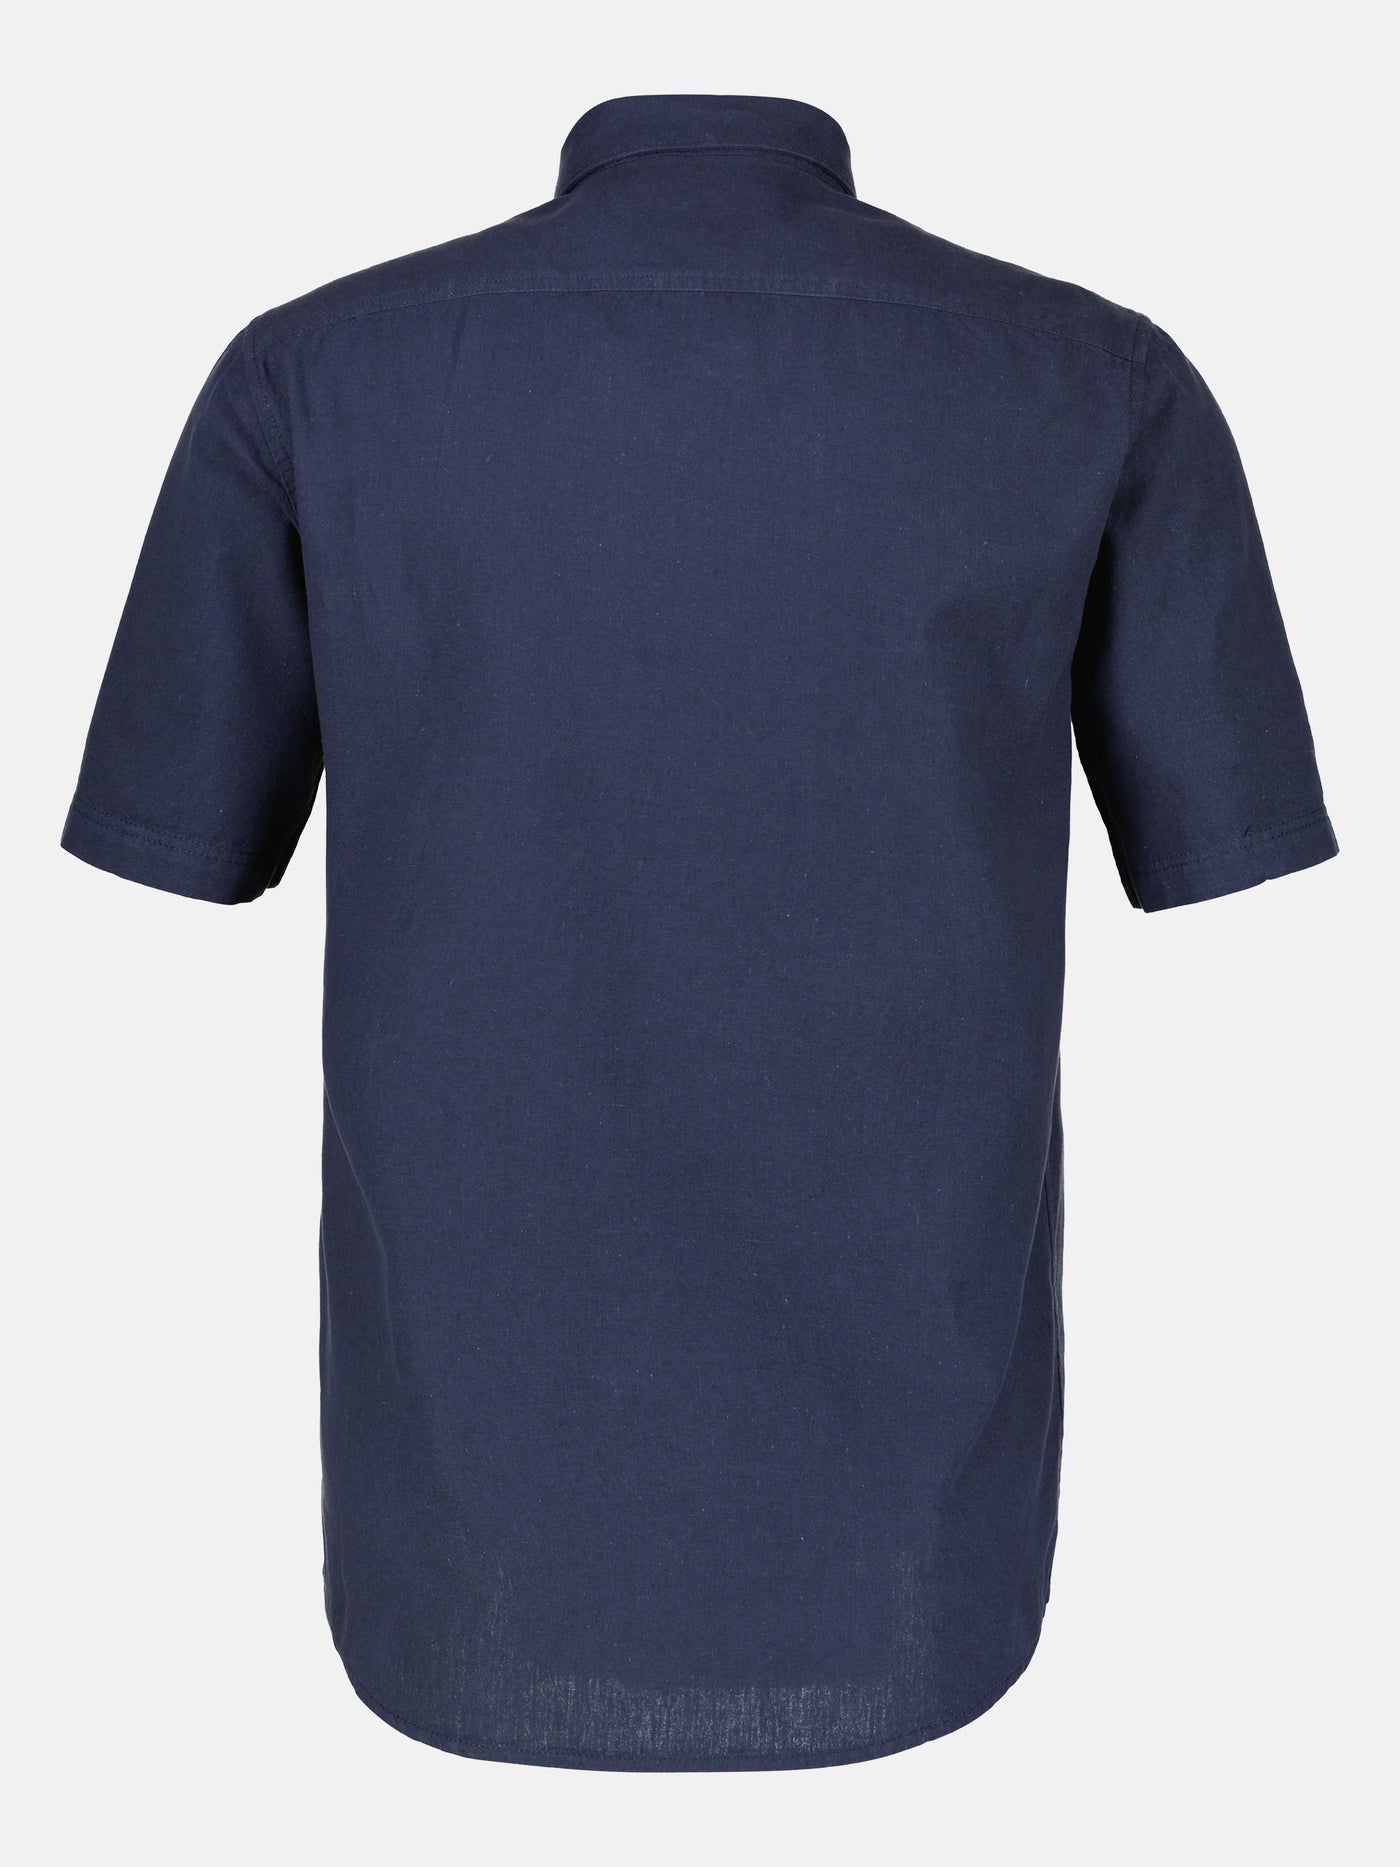 Short-sleeved shirt, cotton-linen mix – SHOP LERROS